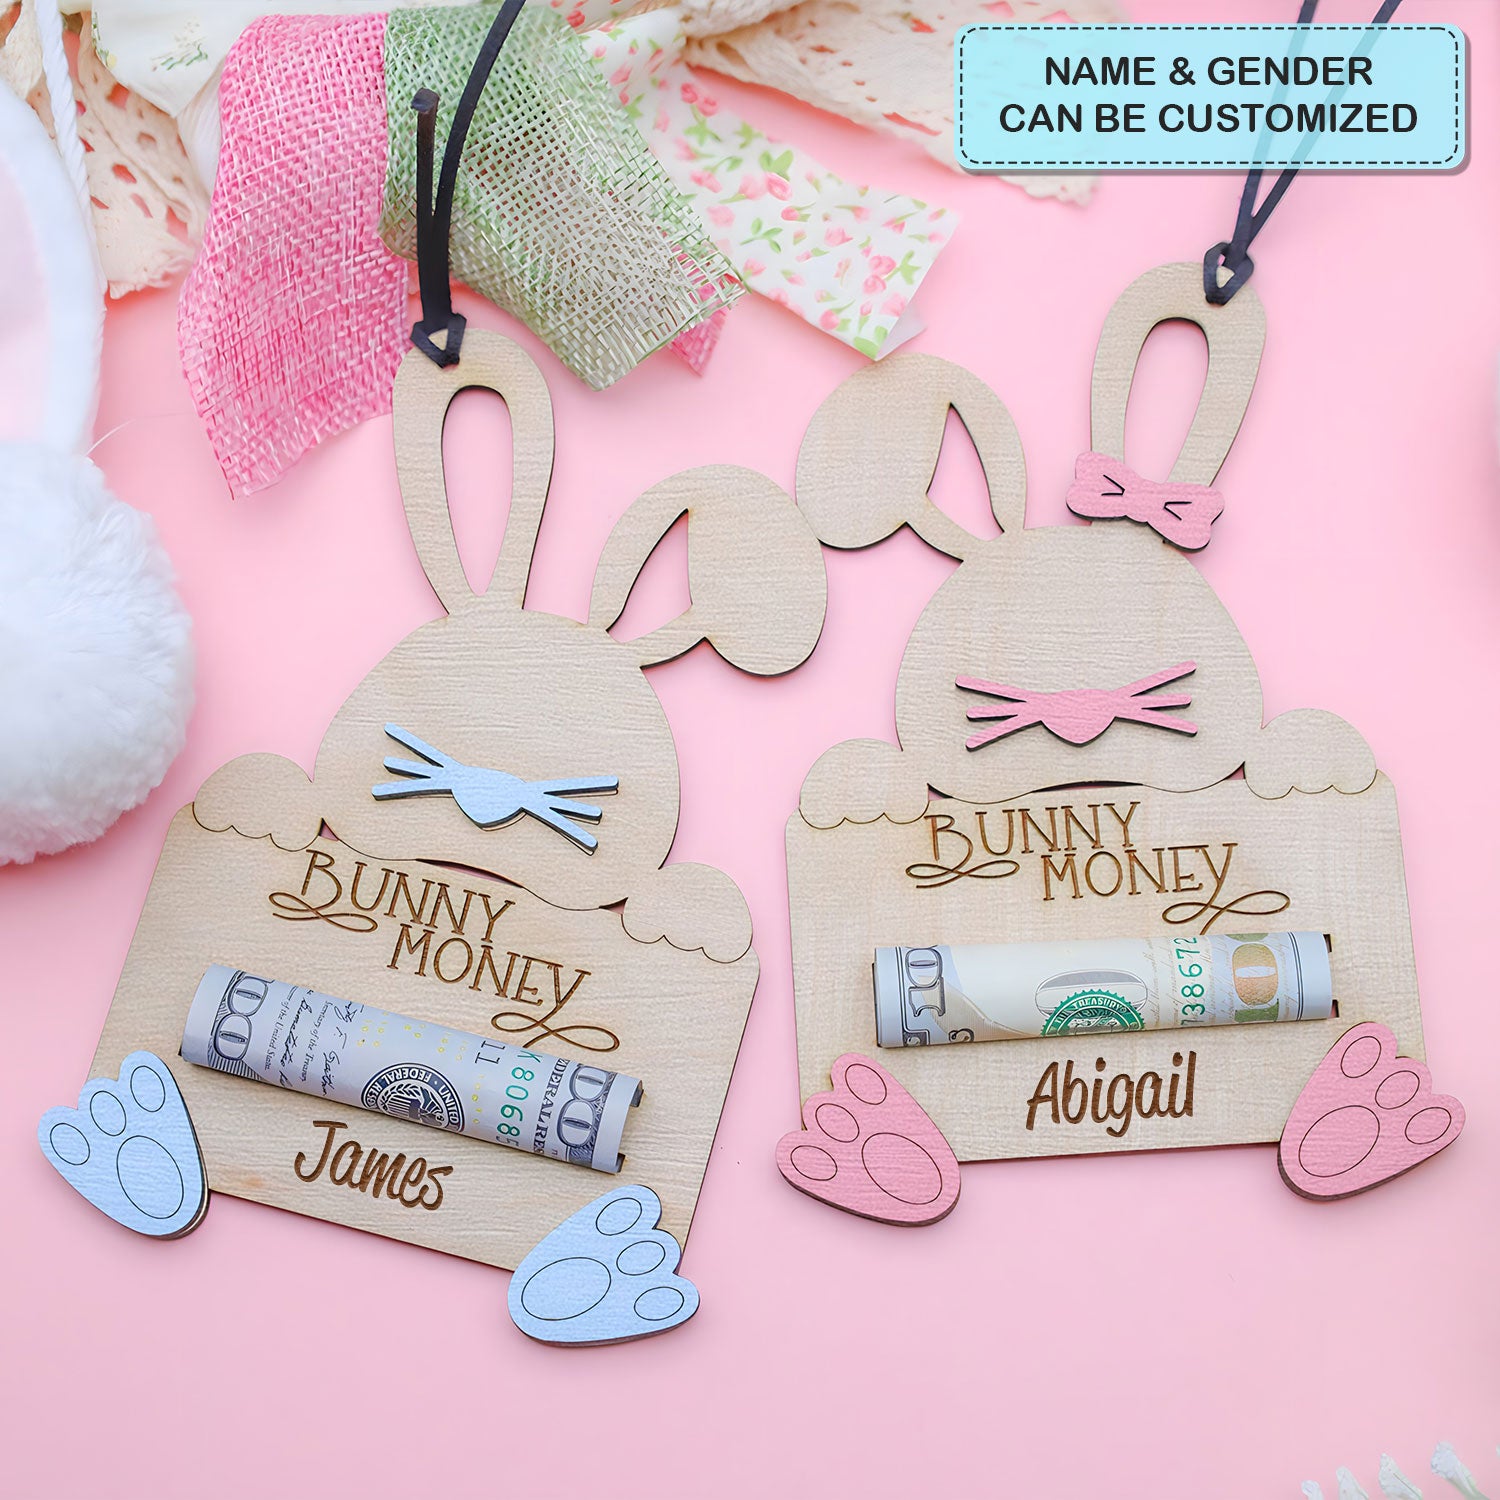 Bunny Money - Personalized Custom Basket Tag - Easter Gift For Family Members, Grandma, Mom